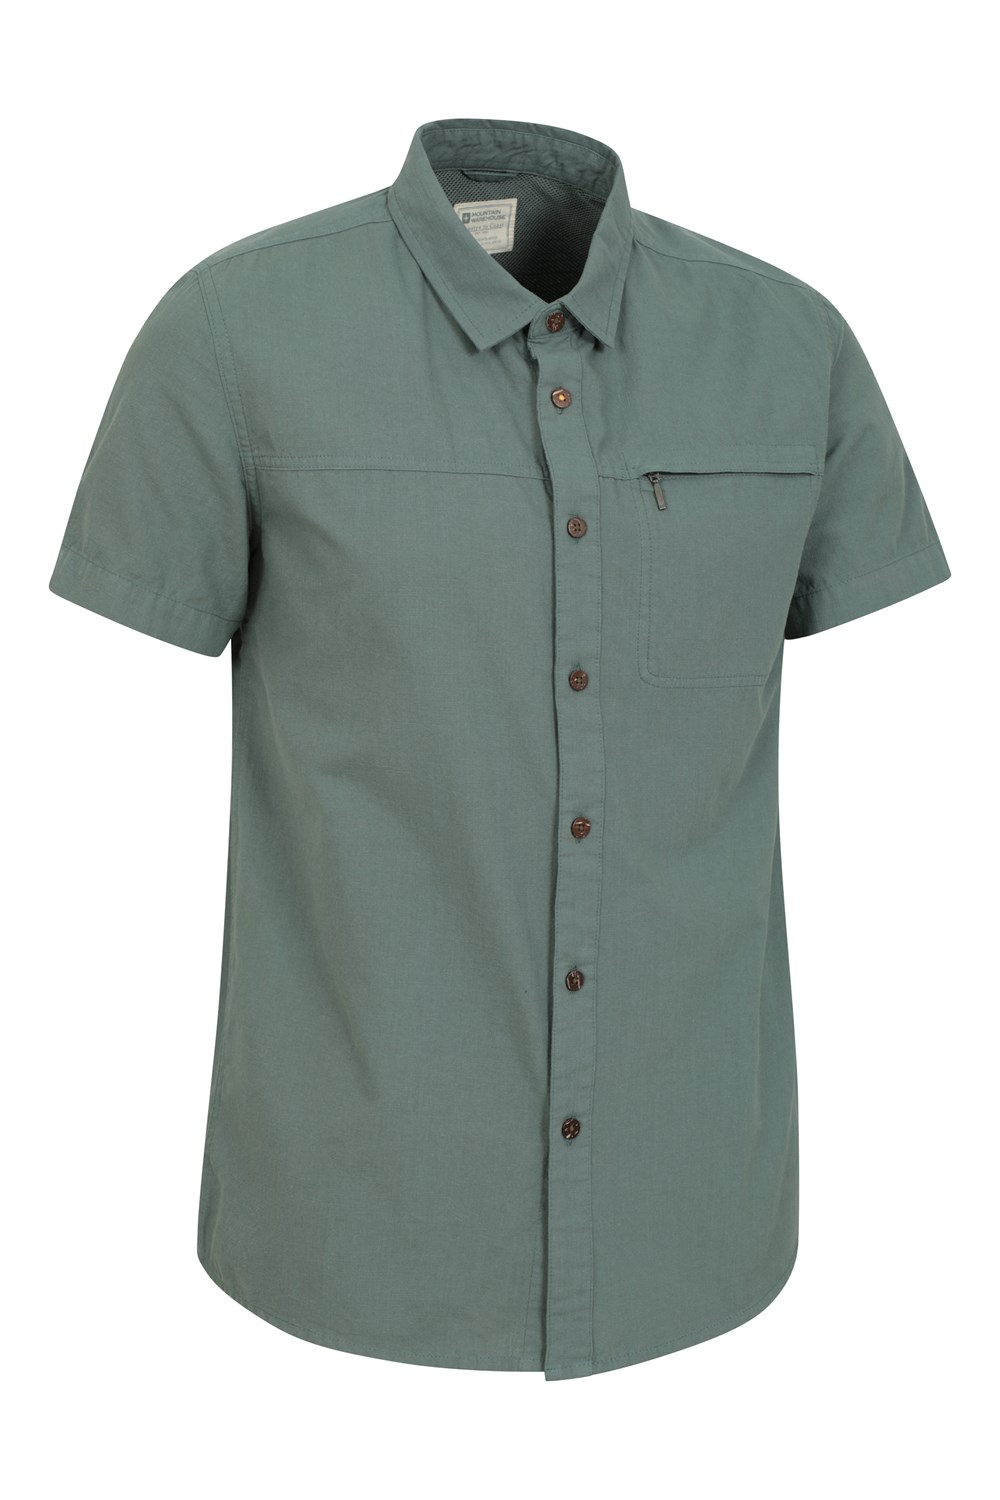 Mountain Warehouse Mens Shirt Coconut Slub Texture Short Sleeved Cotton ...